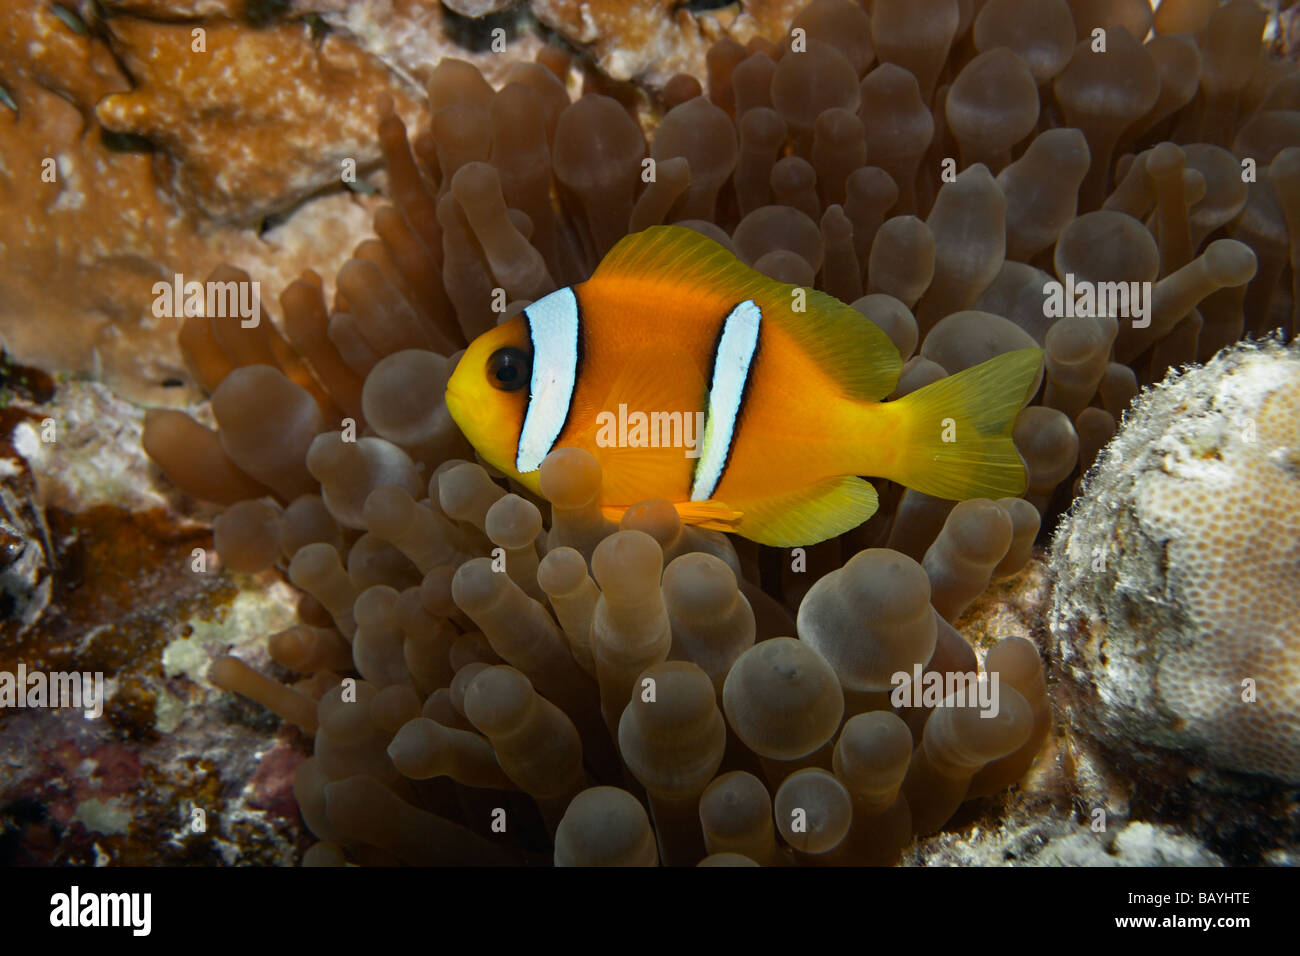 Clown Fish - Amphiprion bicinctus. Red sea anemonefish near anemone Stock Photo